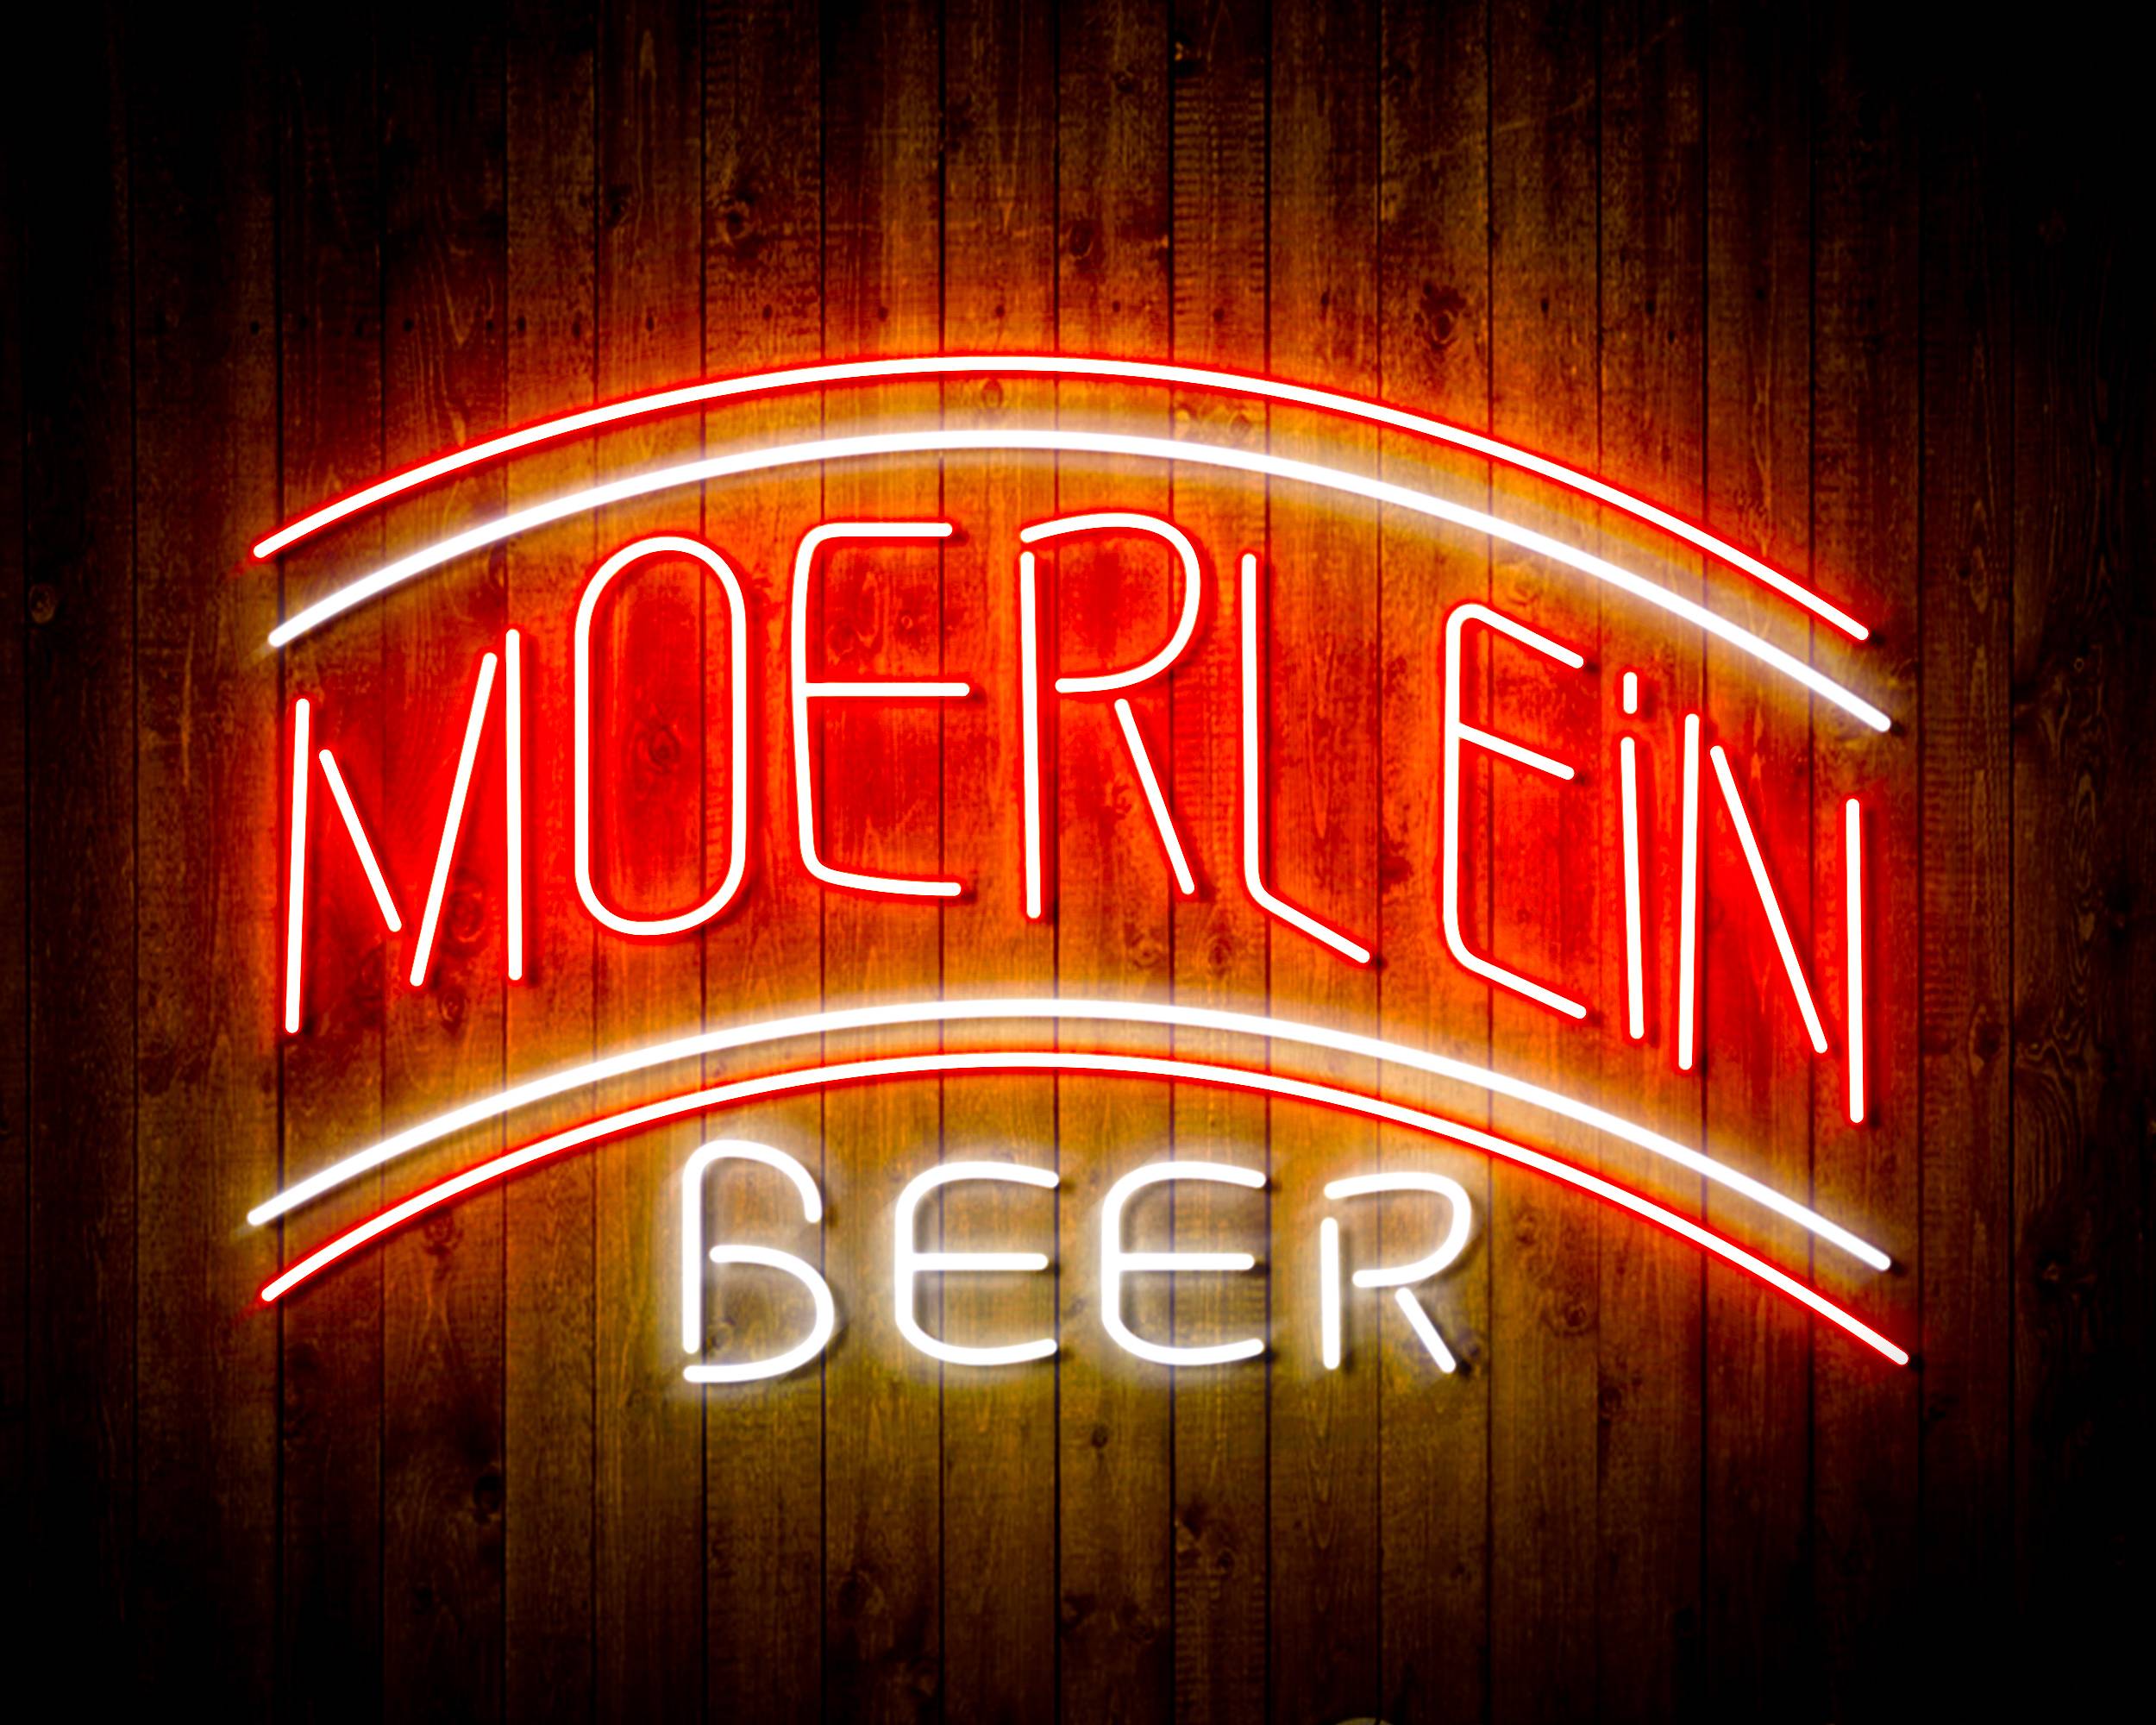 Moerlein Beer Handmade LED Neon Light Sign